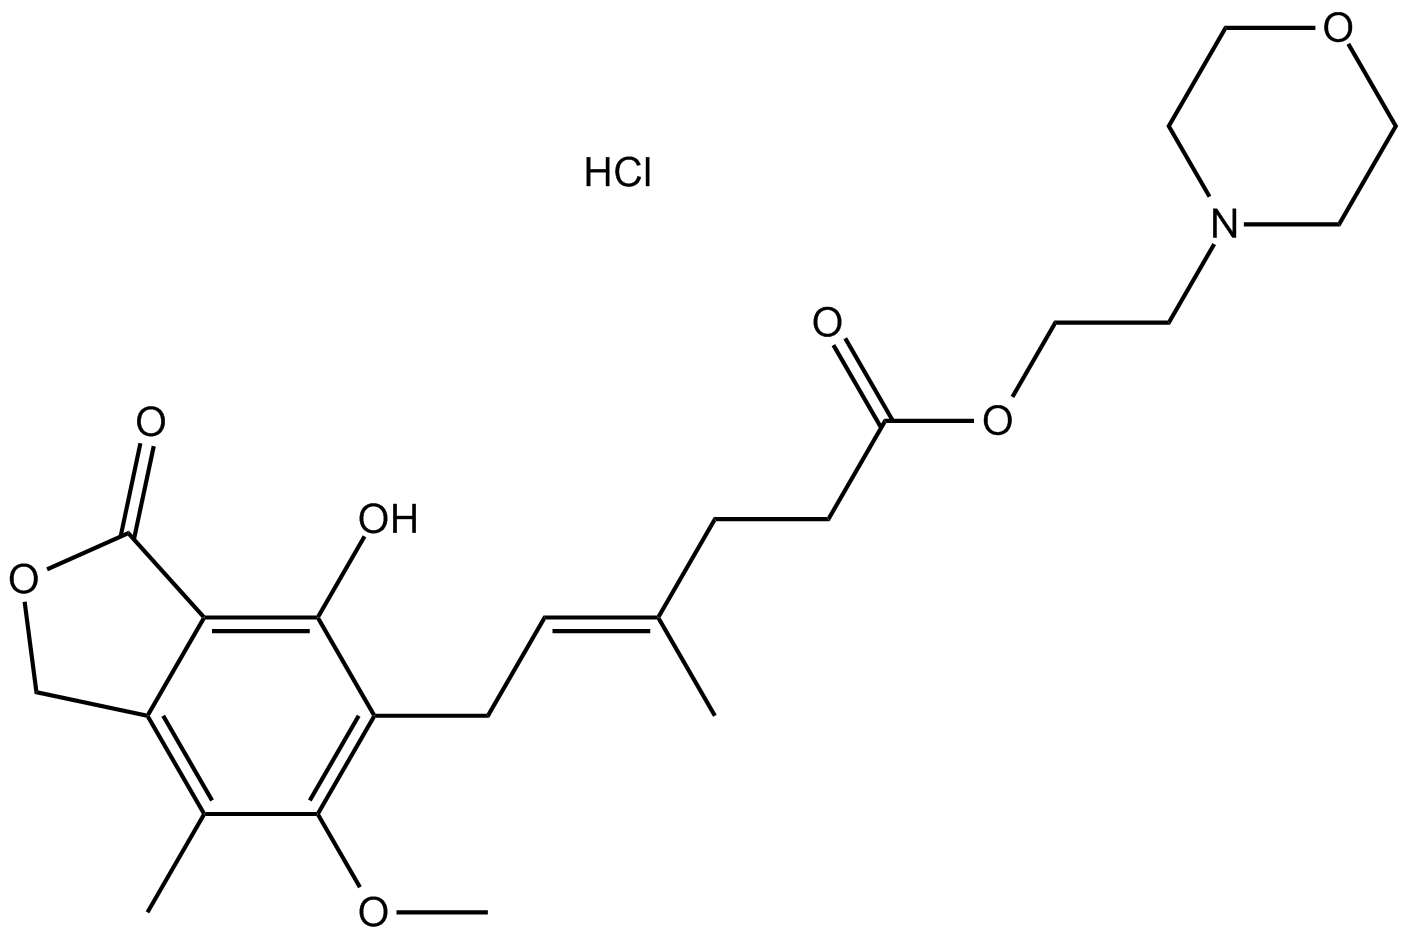 Mycophenolate mofetil hydrochloride